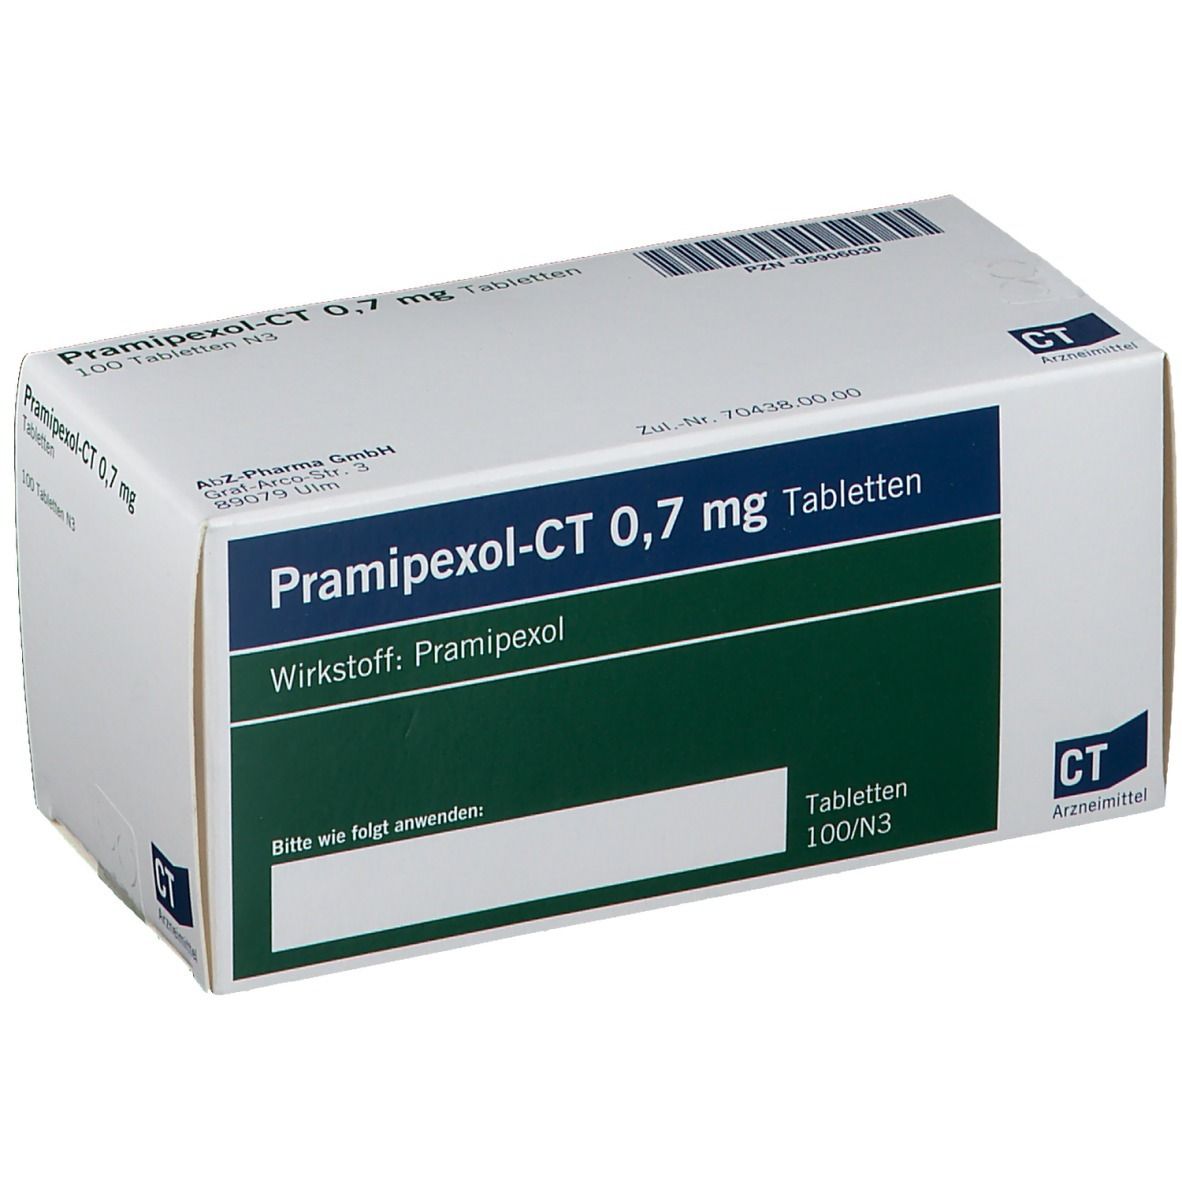 Pramipexol-CT 0,7 mg